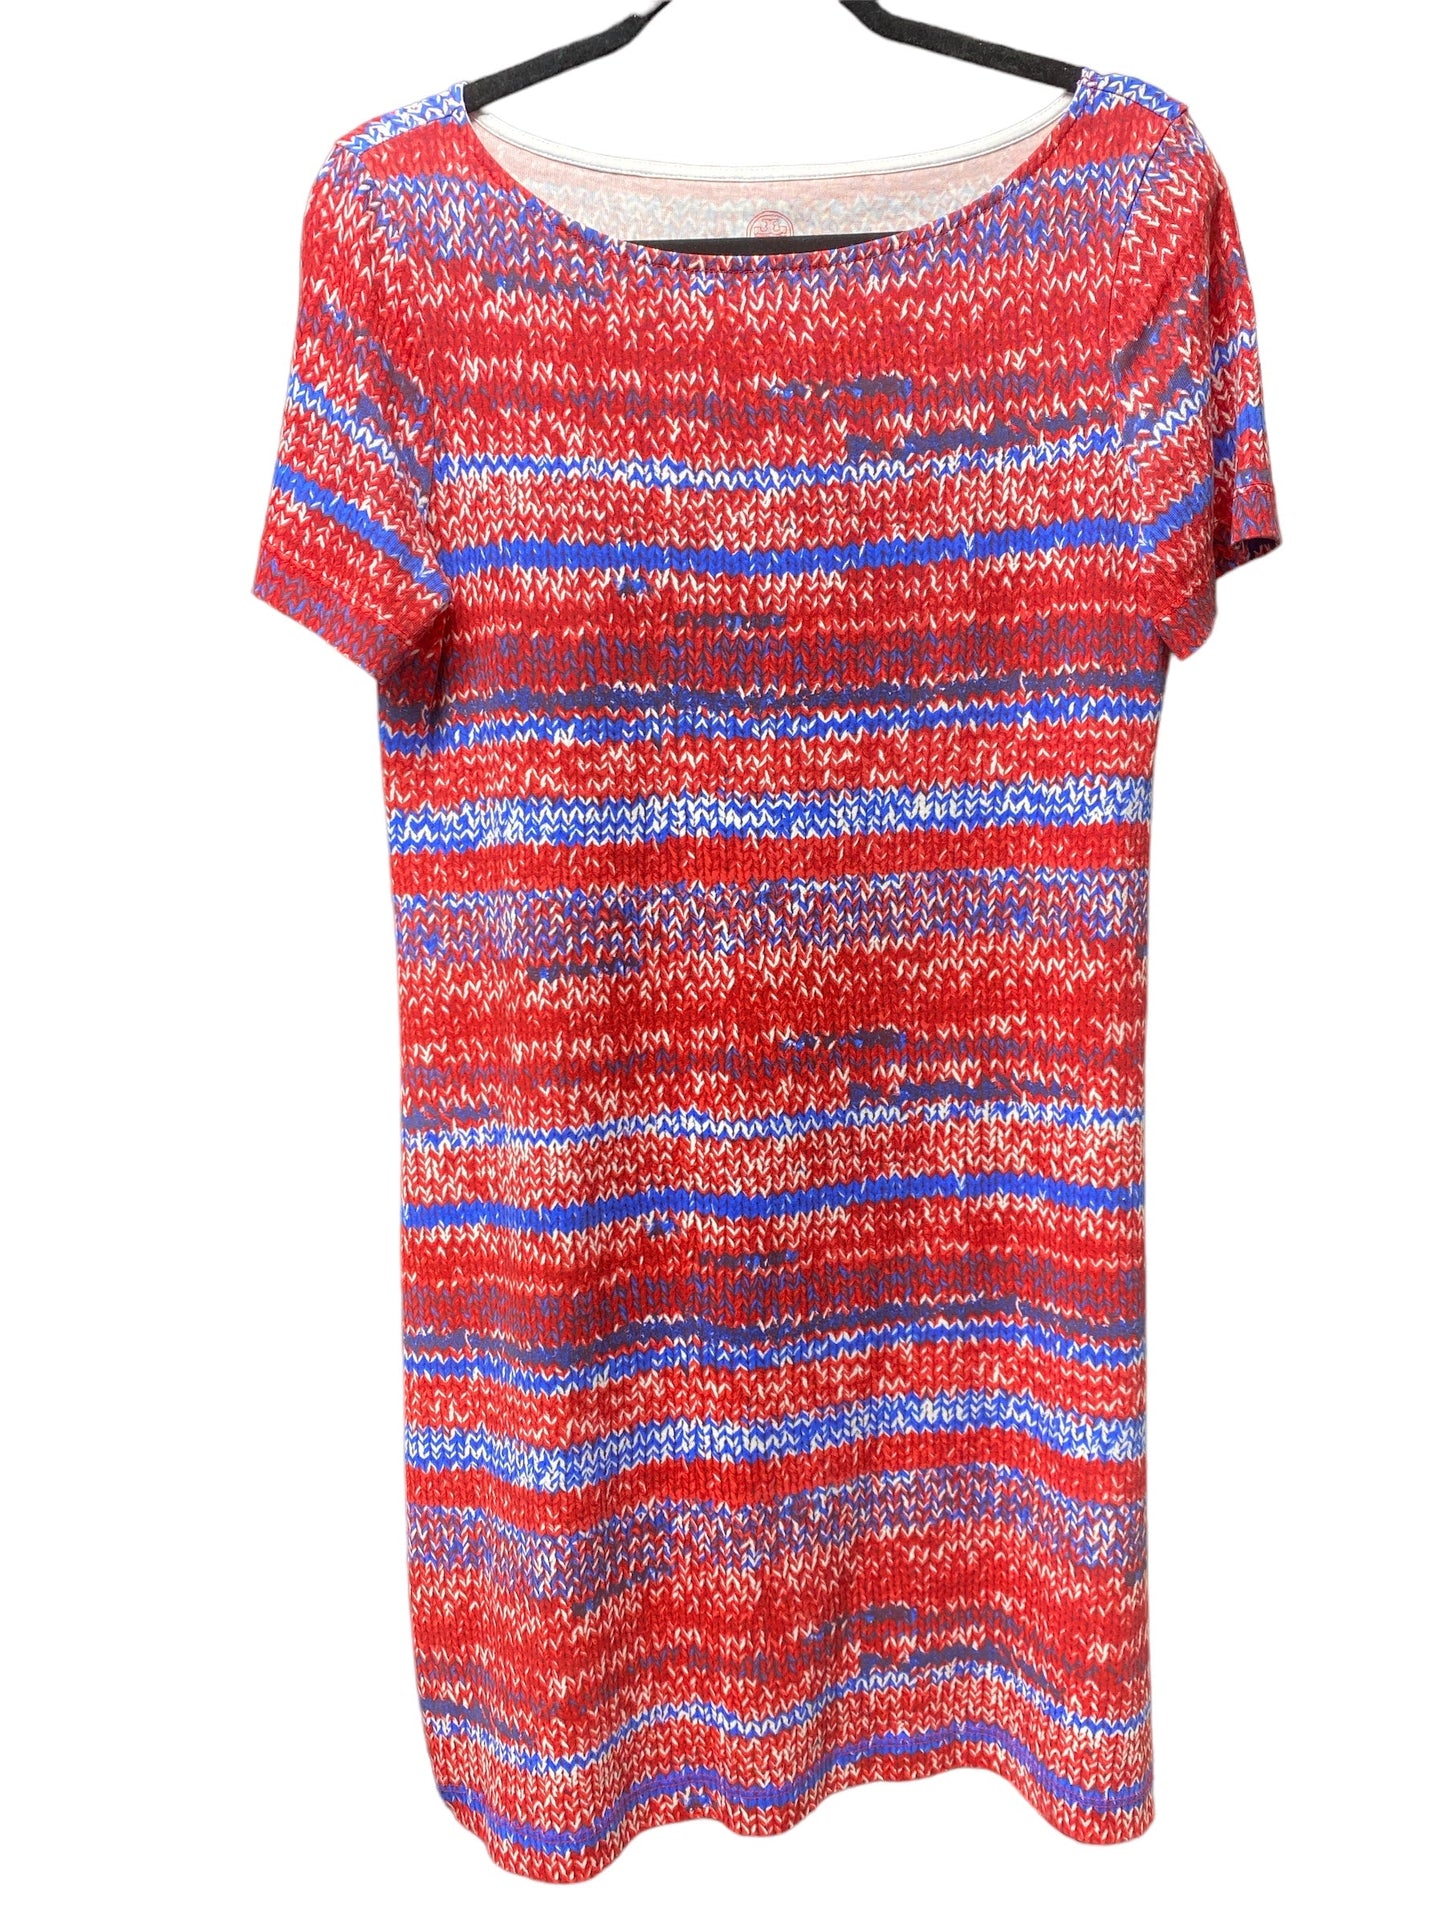 Blue & Red Dress Designer Tory Burch, Size M